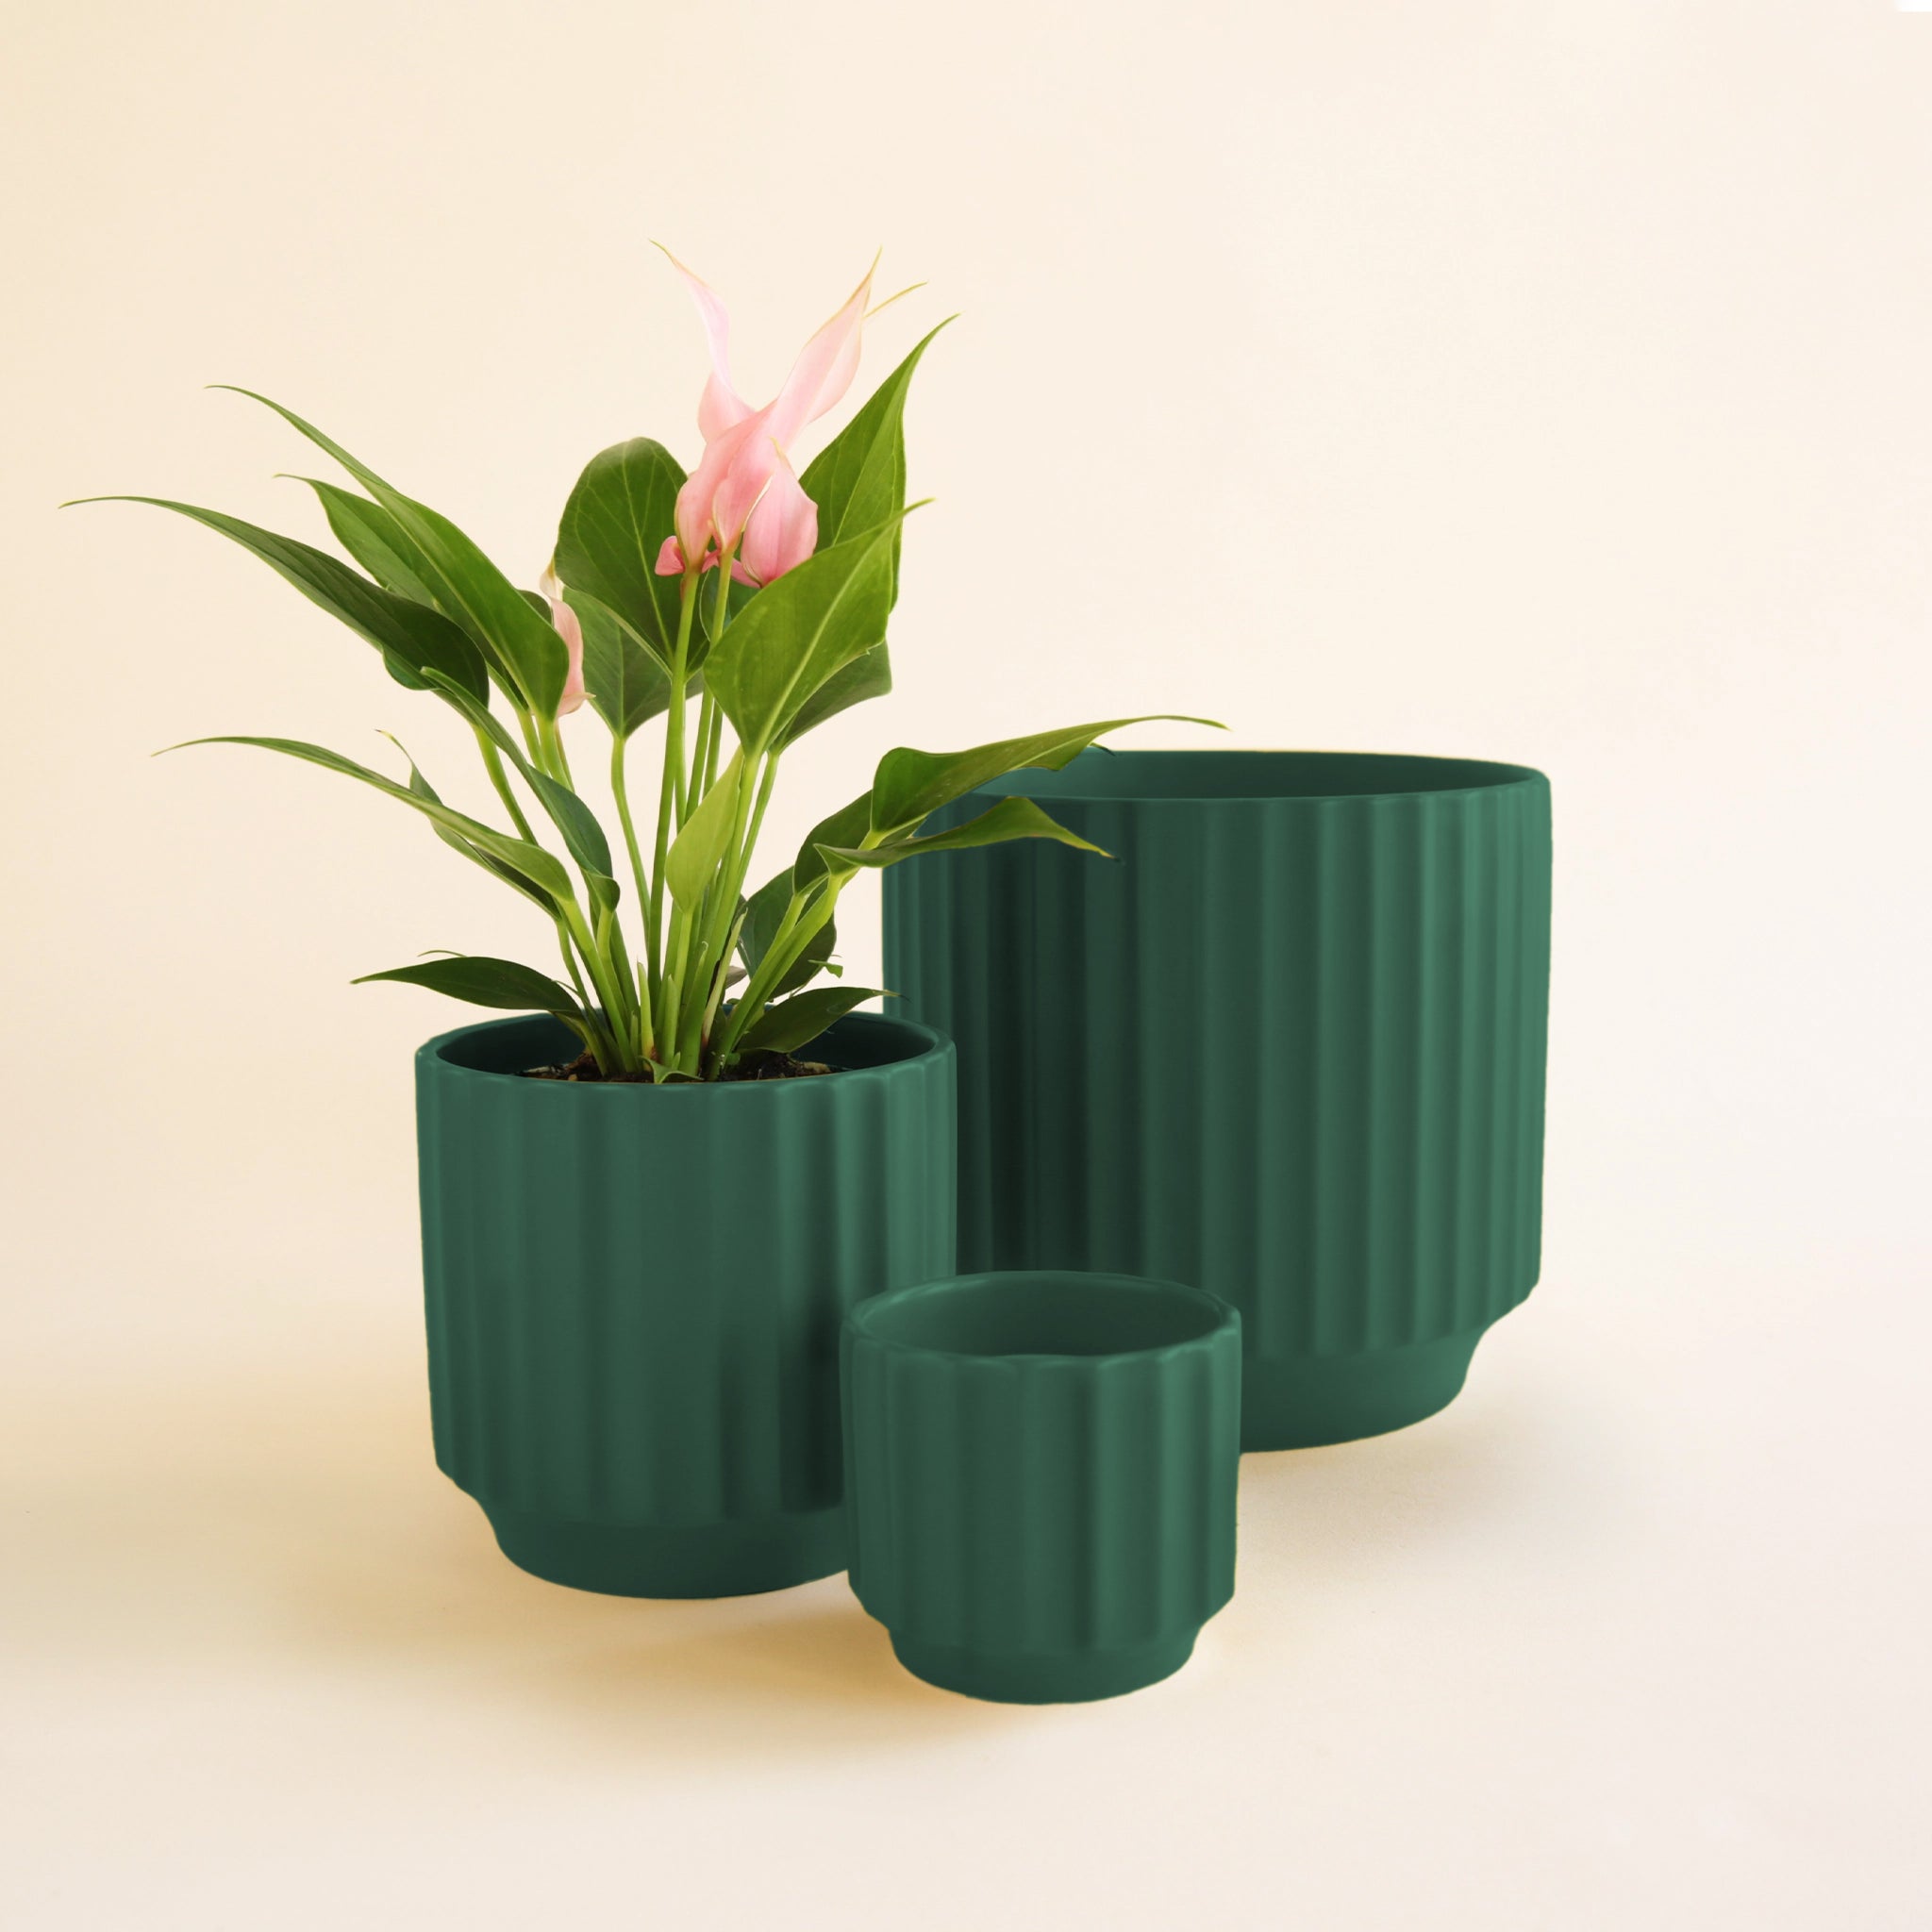 A dark green fluted ceramic planter in three different sizes.